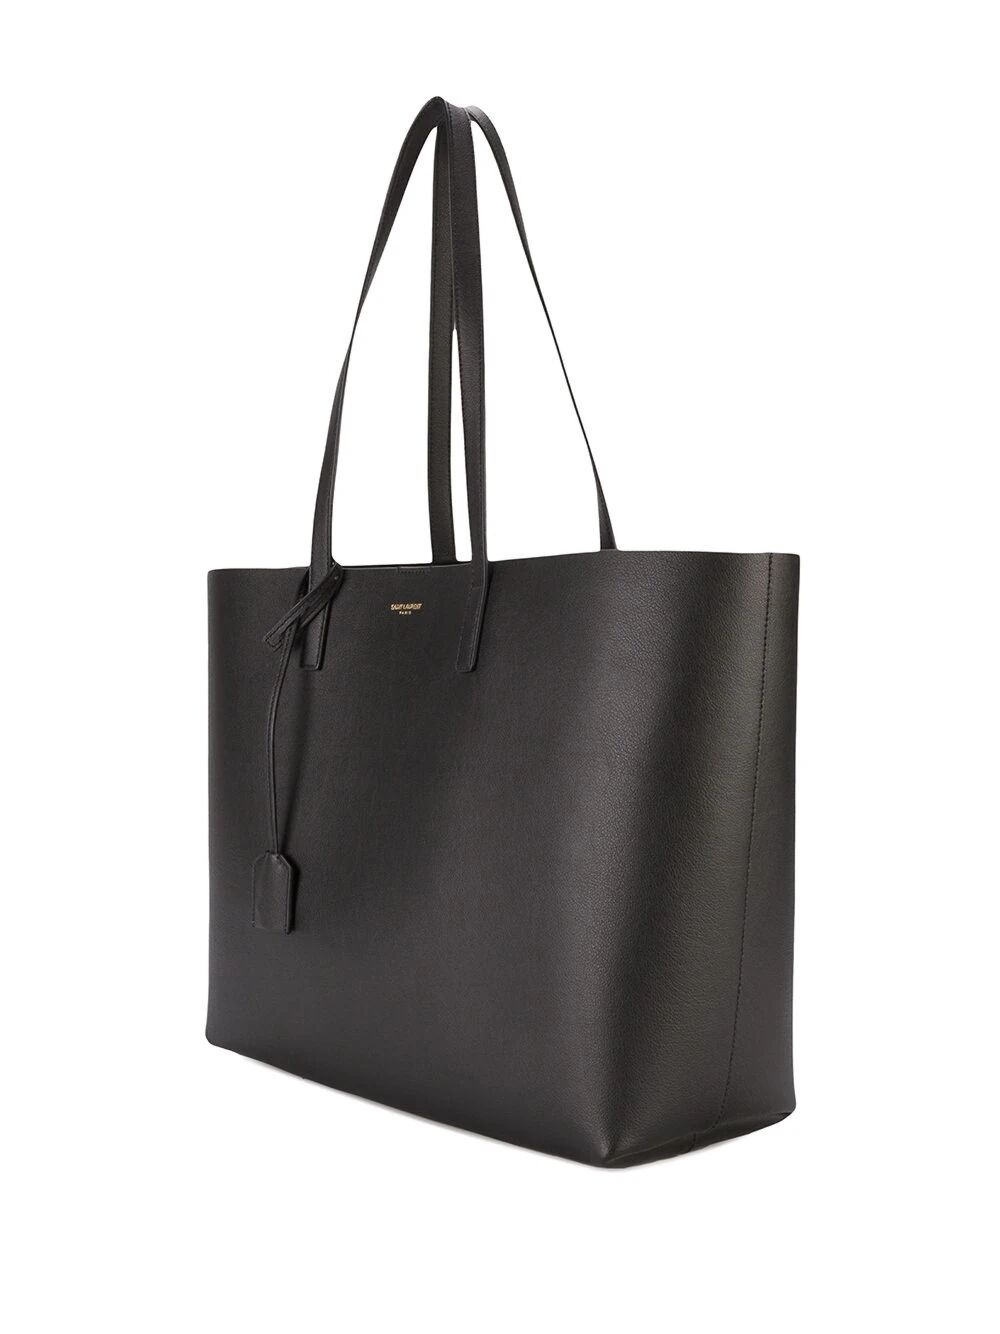 Saint laurent leather shopping bag - 5